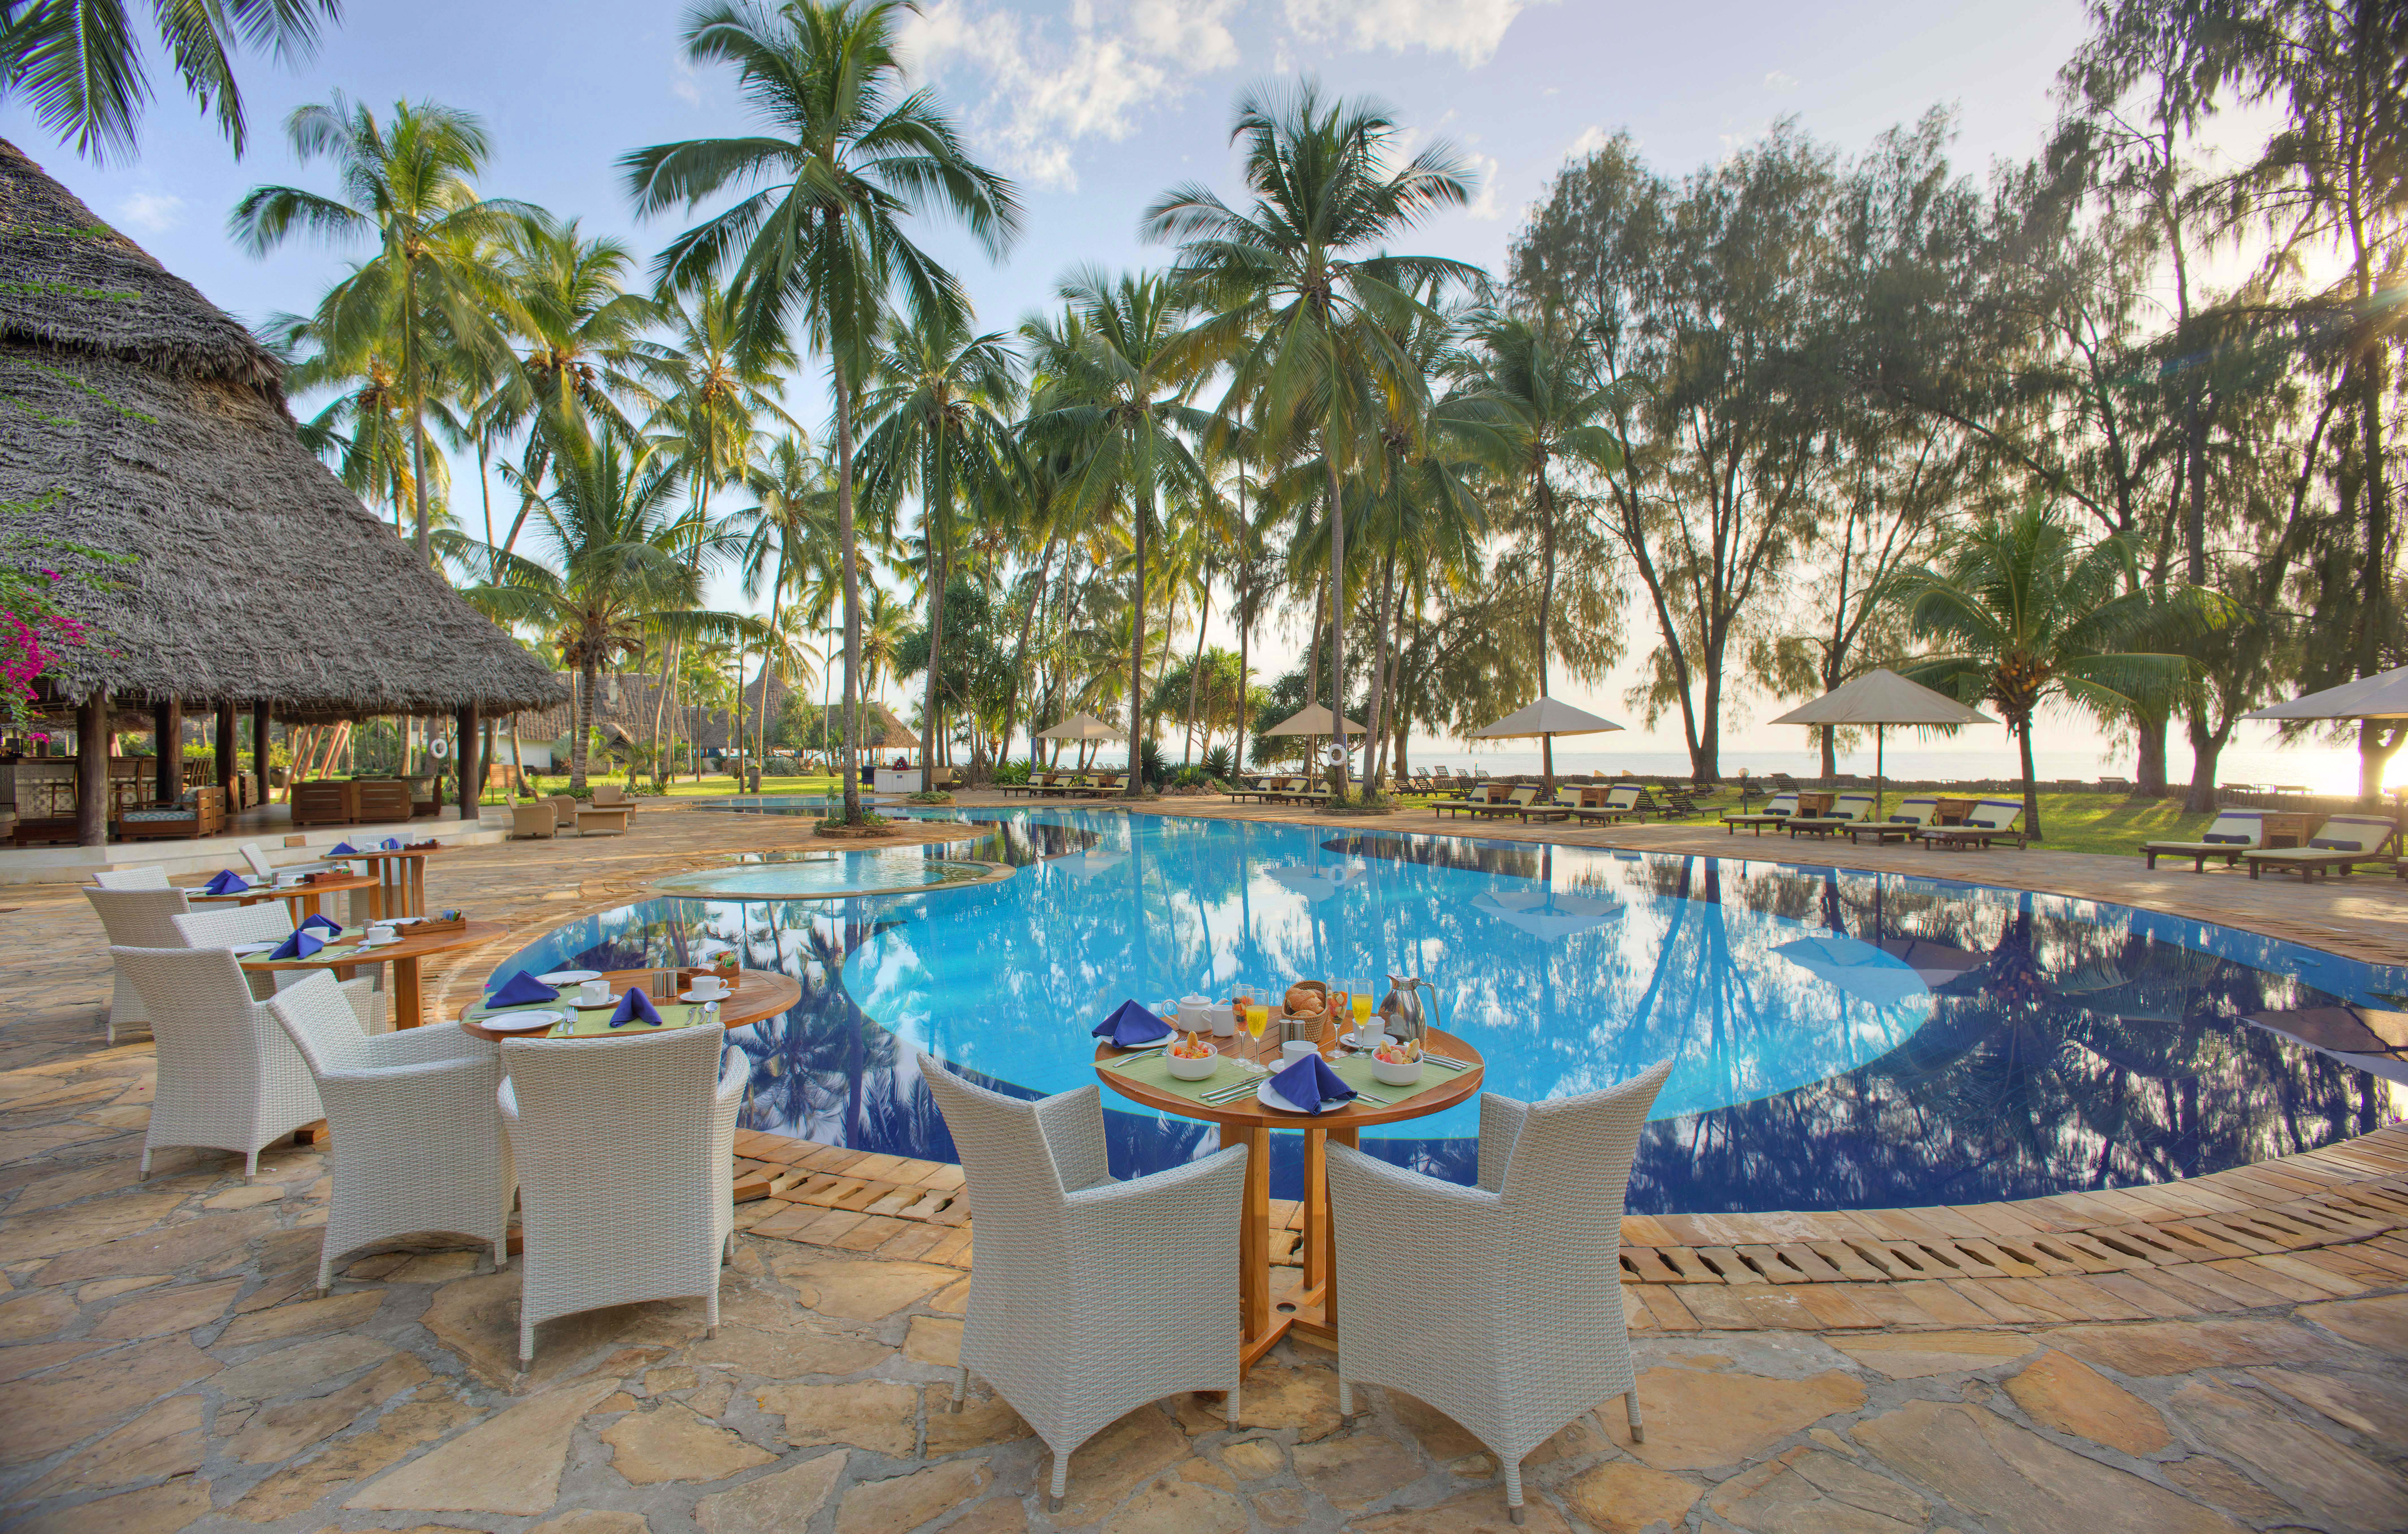 Bluebay Beach Resort and Spa in Kiwengwa Beach - Zanzibar - Book a stunning  Resort on the wide, sparkling beaches of Kiwengwa